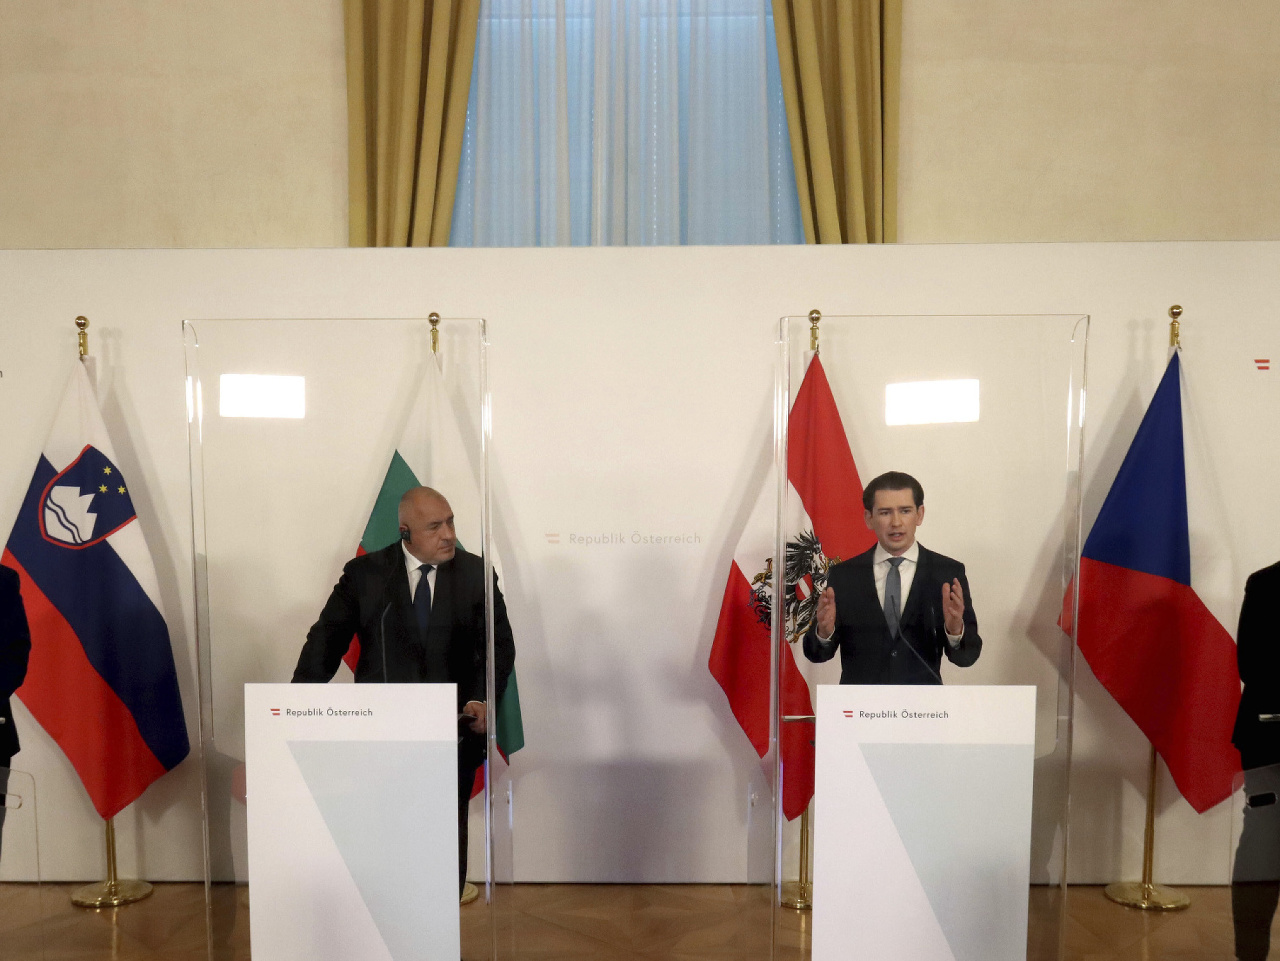 Sebastian Kurz spoločne s premiérmi Česka, Slovinska a Bulharska